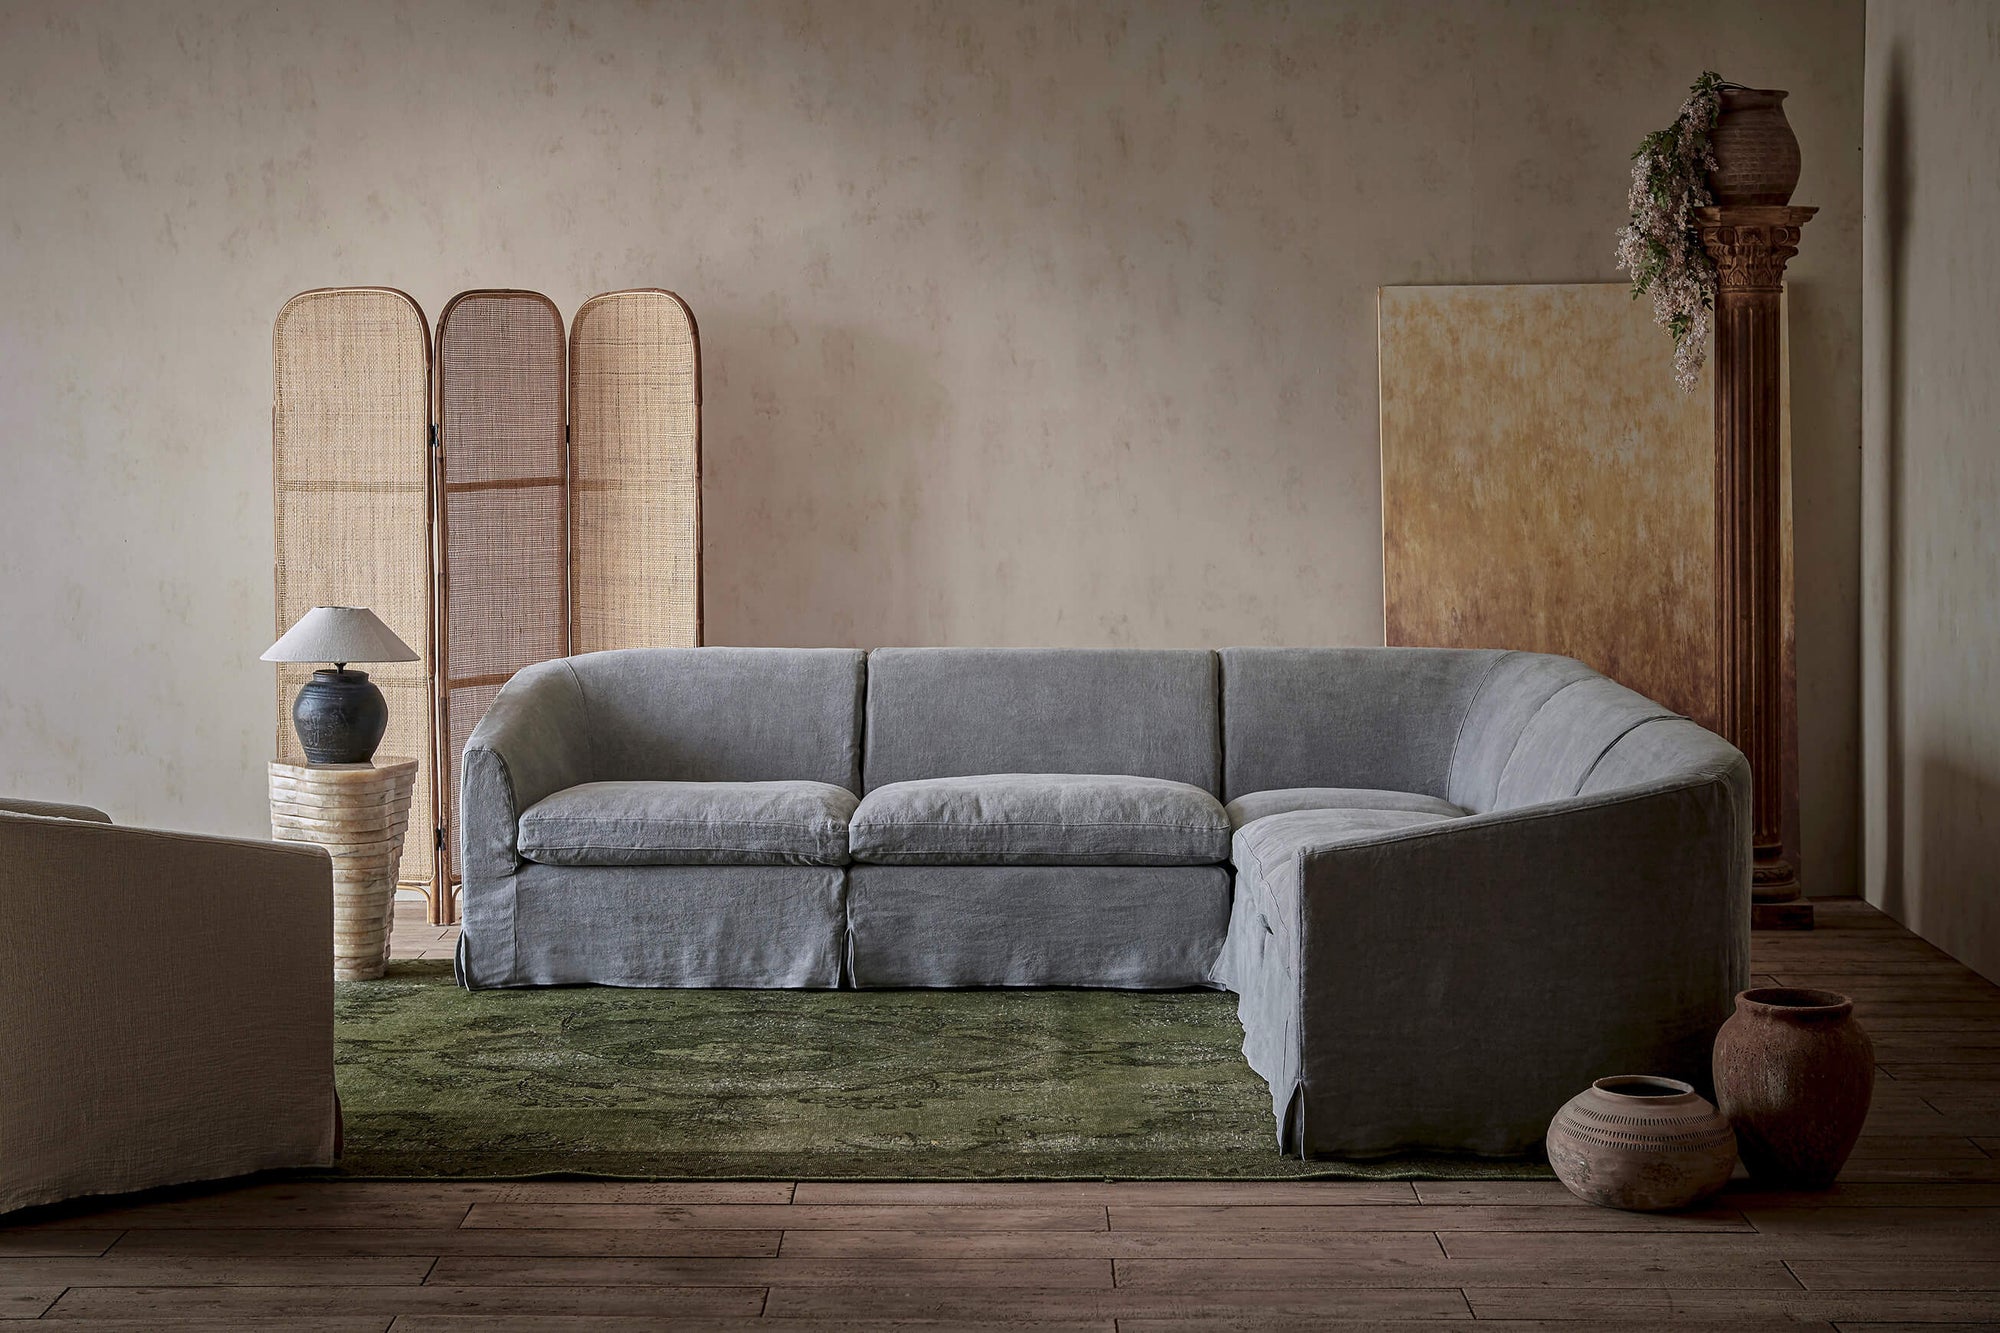 Ziki Corner Sectional Sofa in Ink Cap, a medium cool grey Light Weight Linen